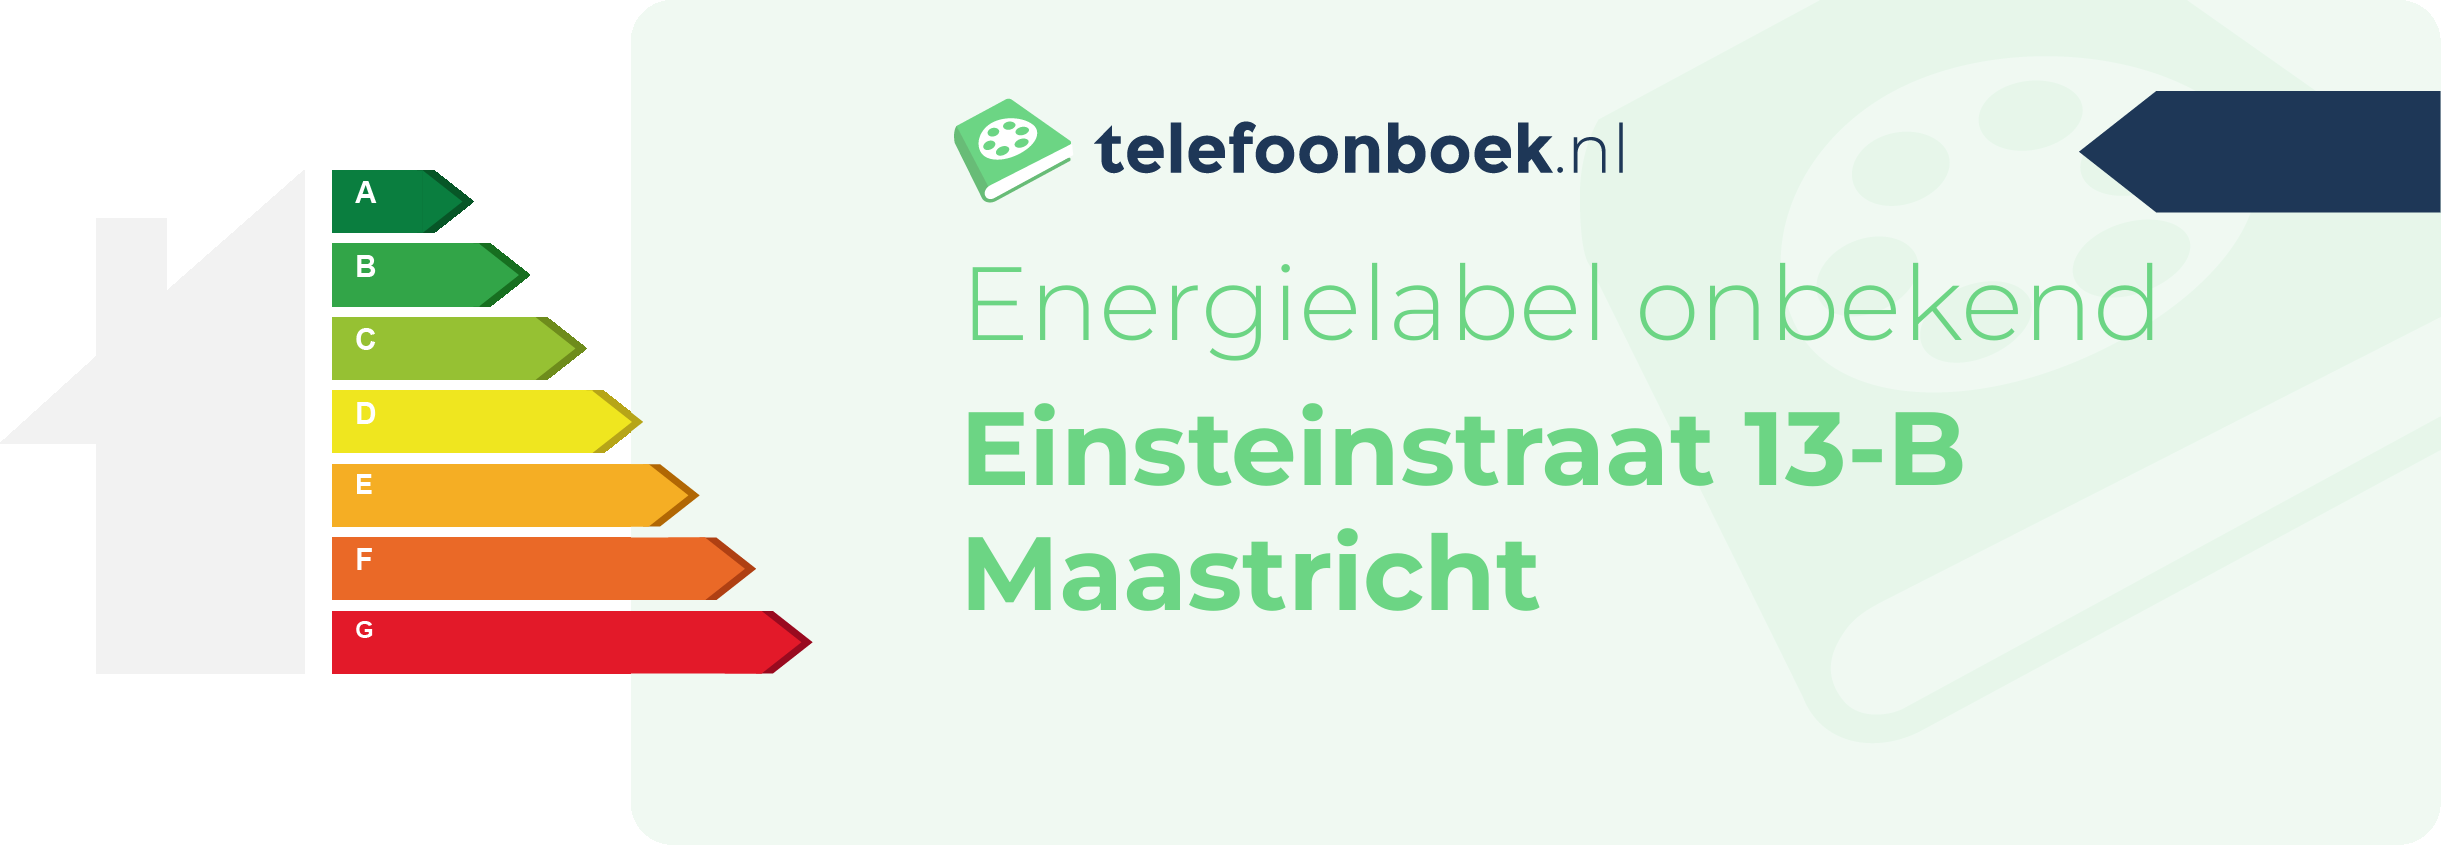 Energielabel Einsteinstraat 13-B Maastricht